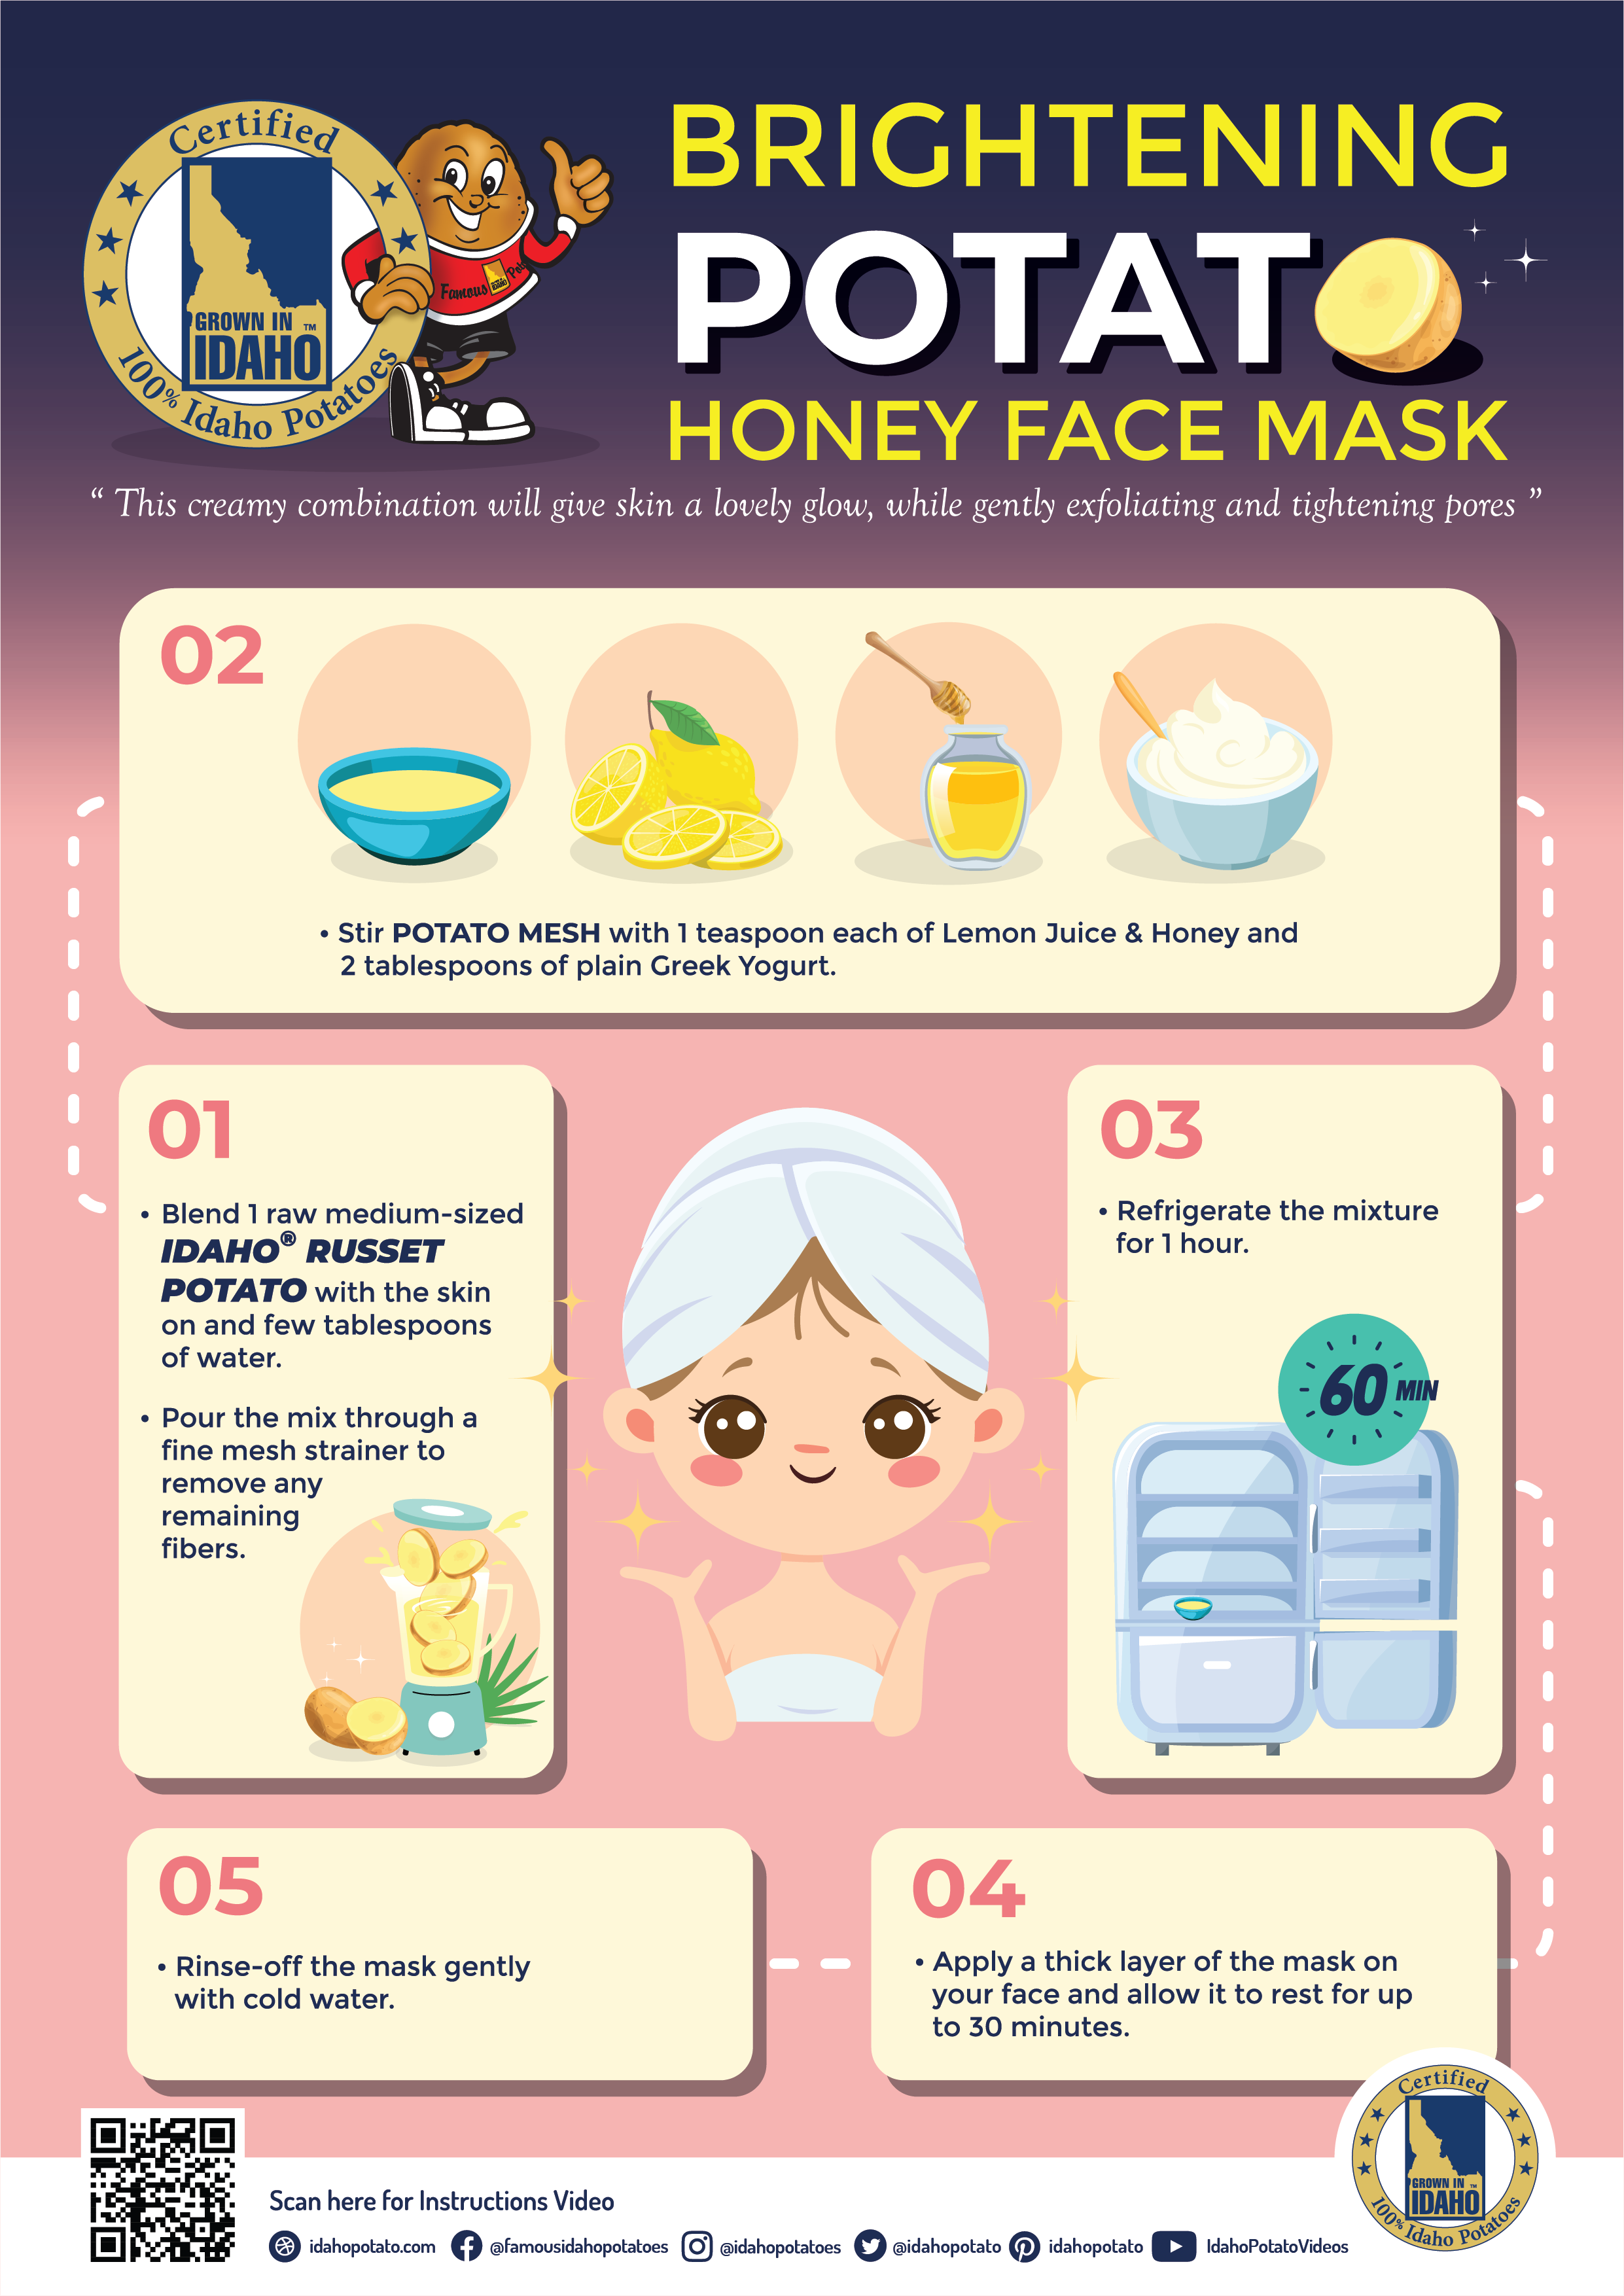 Brightening Idaho® Potato Honey Face Mask